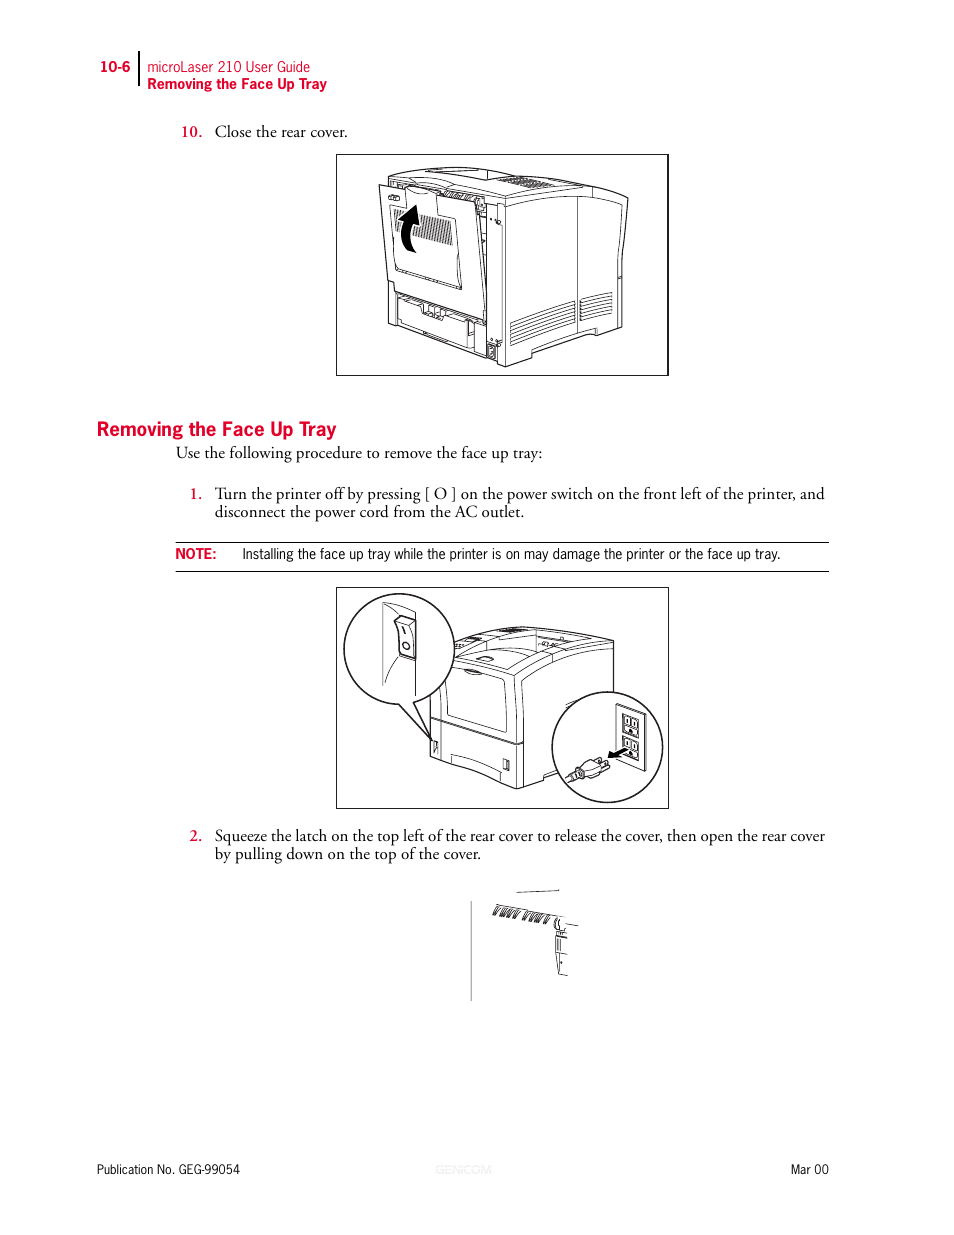 Removing the face up tray, Removing the face up tray 10-6 | Genicom microLaser 210 User Manual | Page 196 / 212